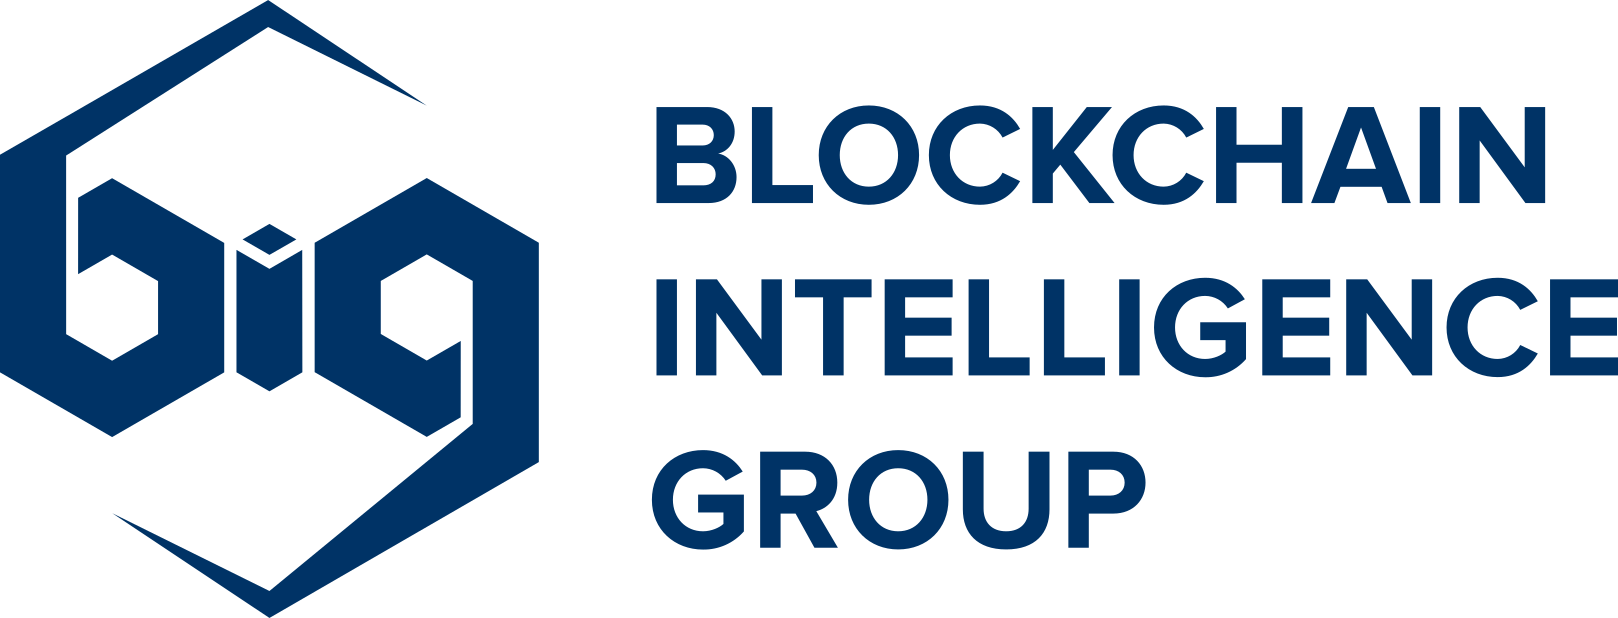 Blockchain Intelliegence Group